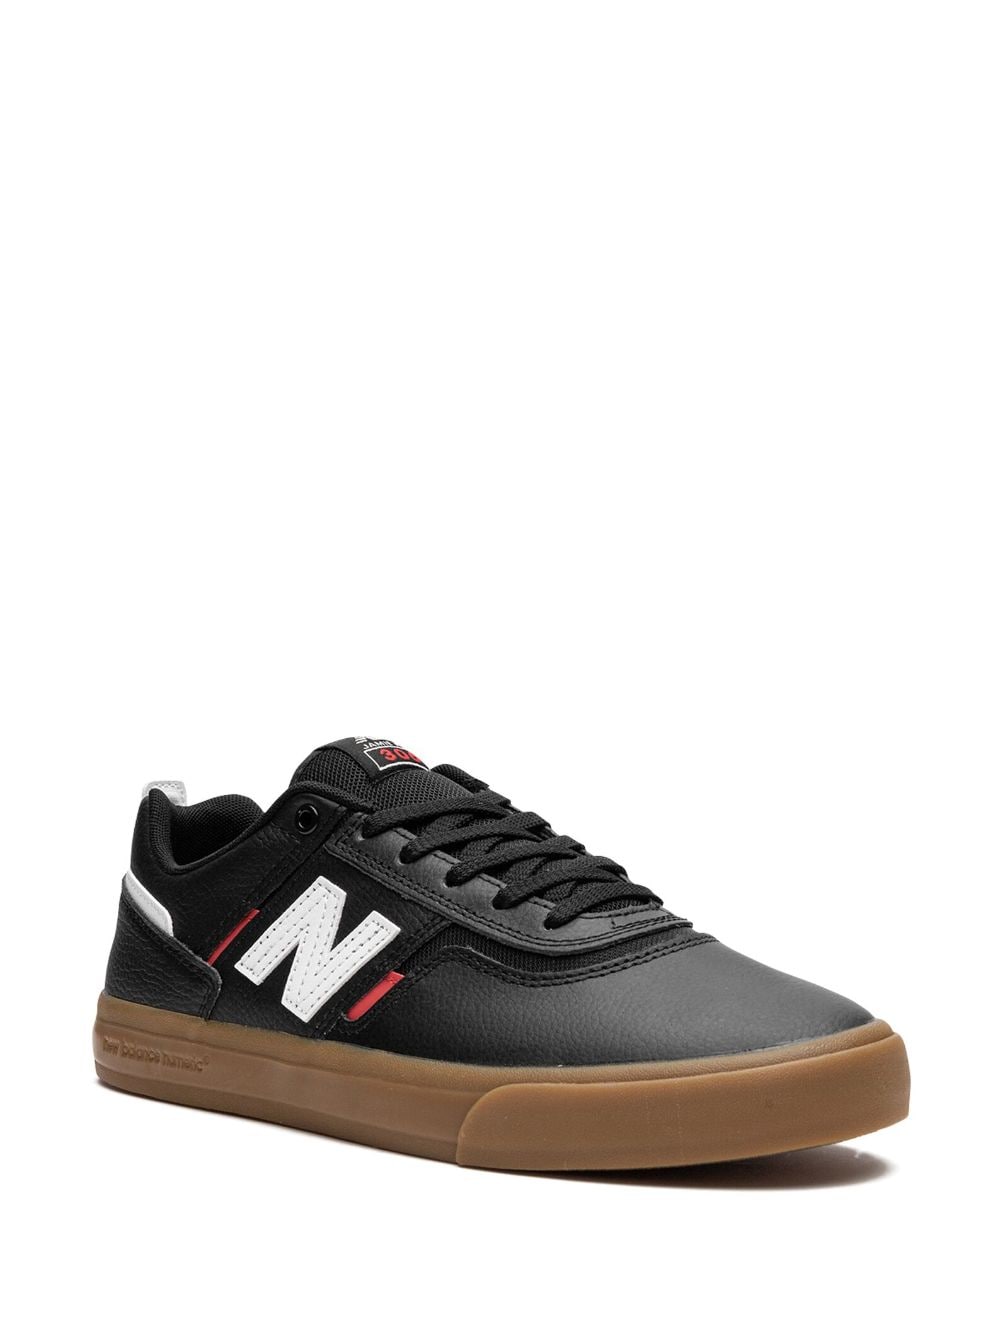 Image 2 of New Balance Numeric 306 "Black/Gum" sneakers